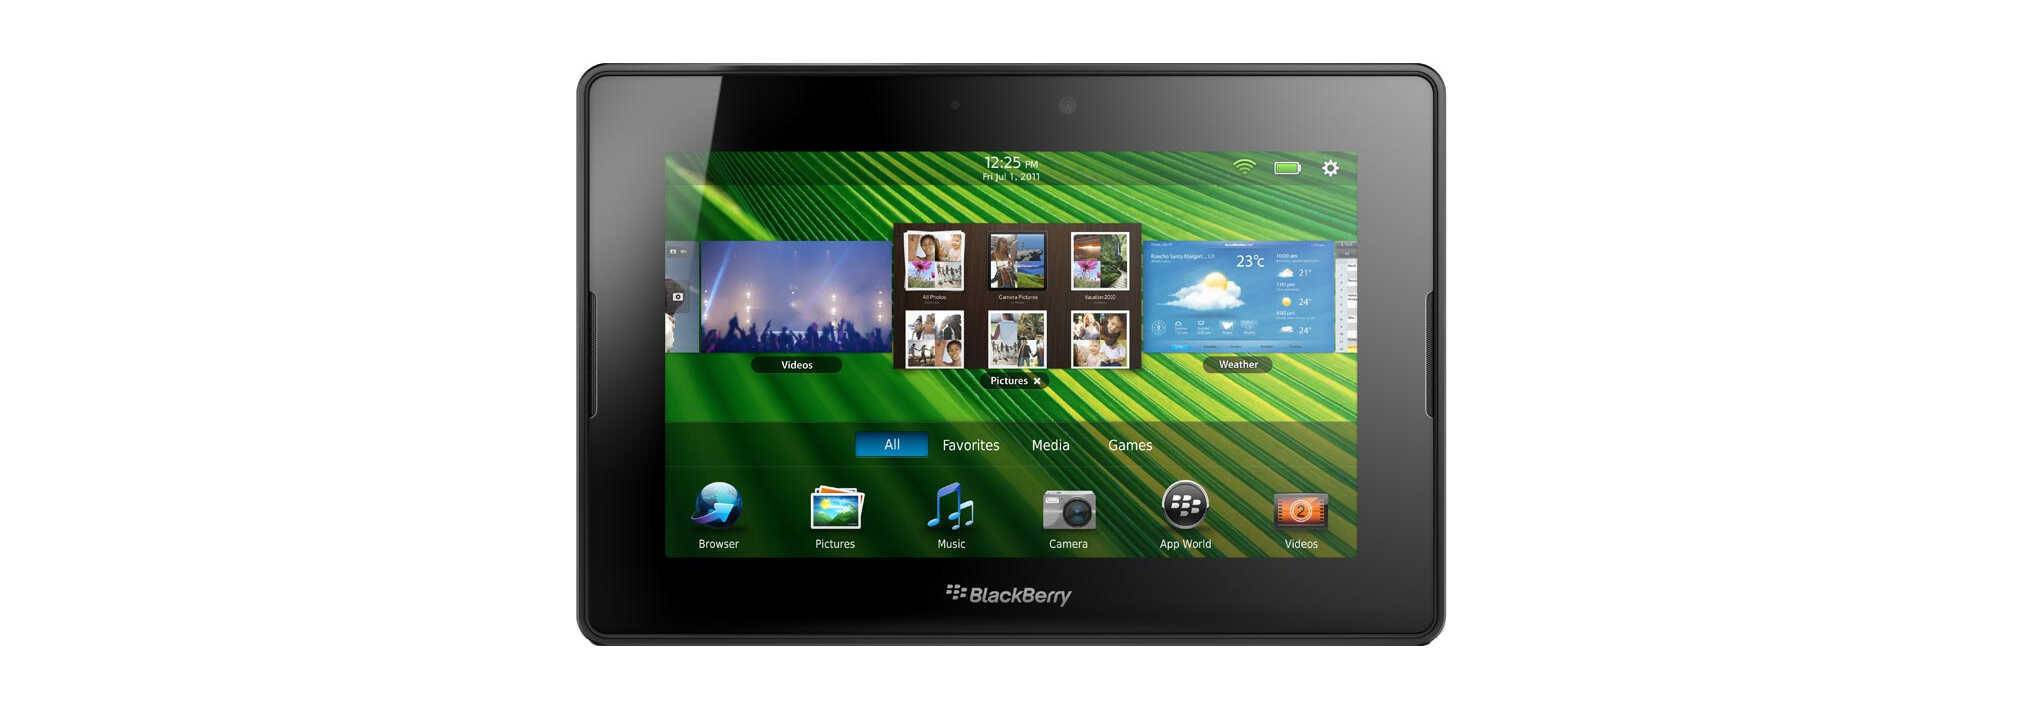 BlackBerry's PlayBook tablet